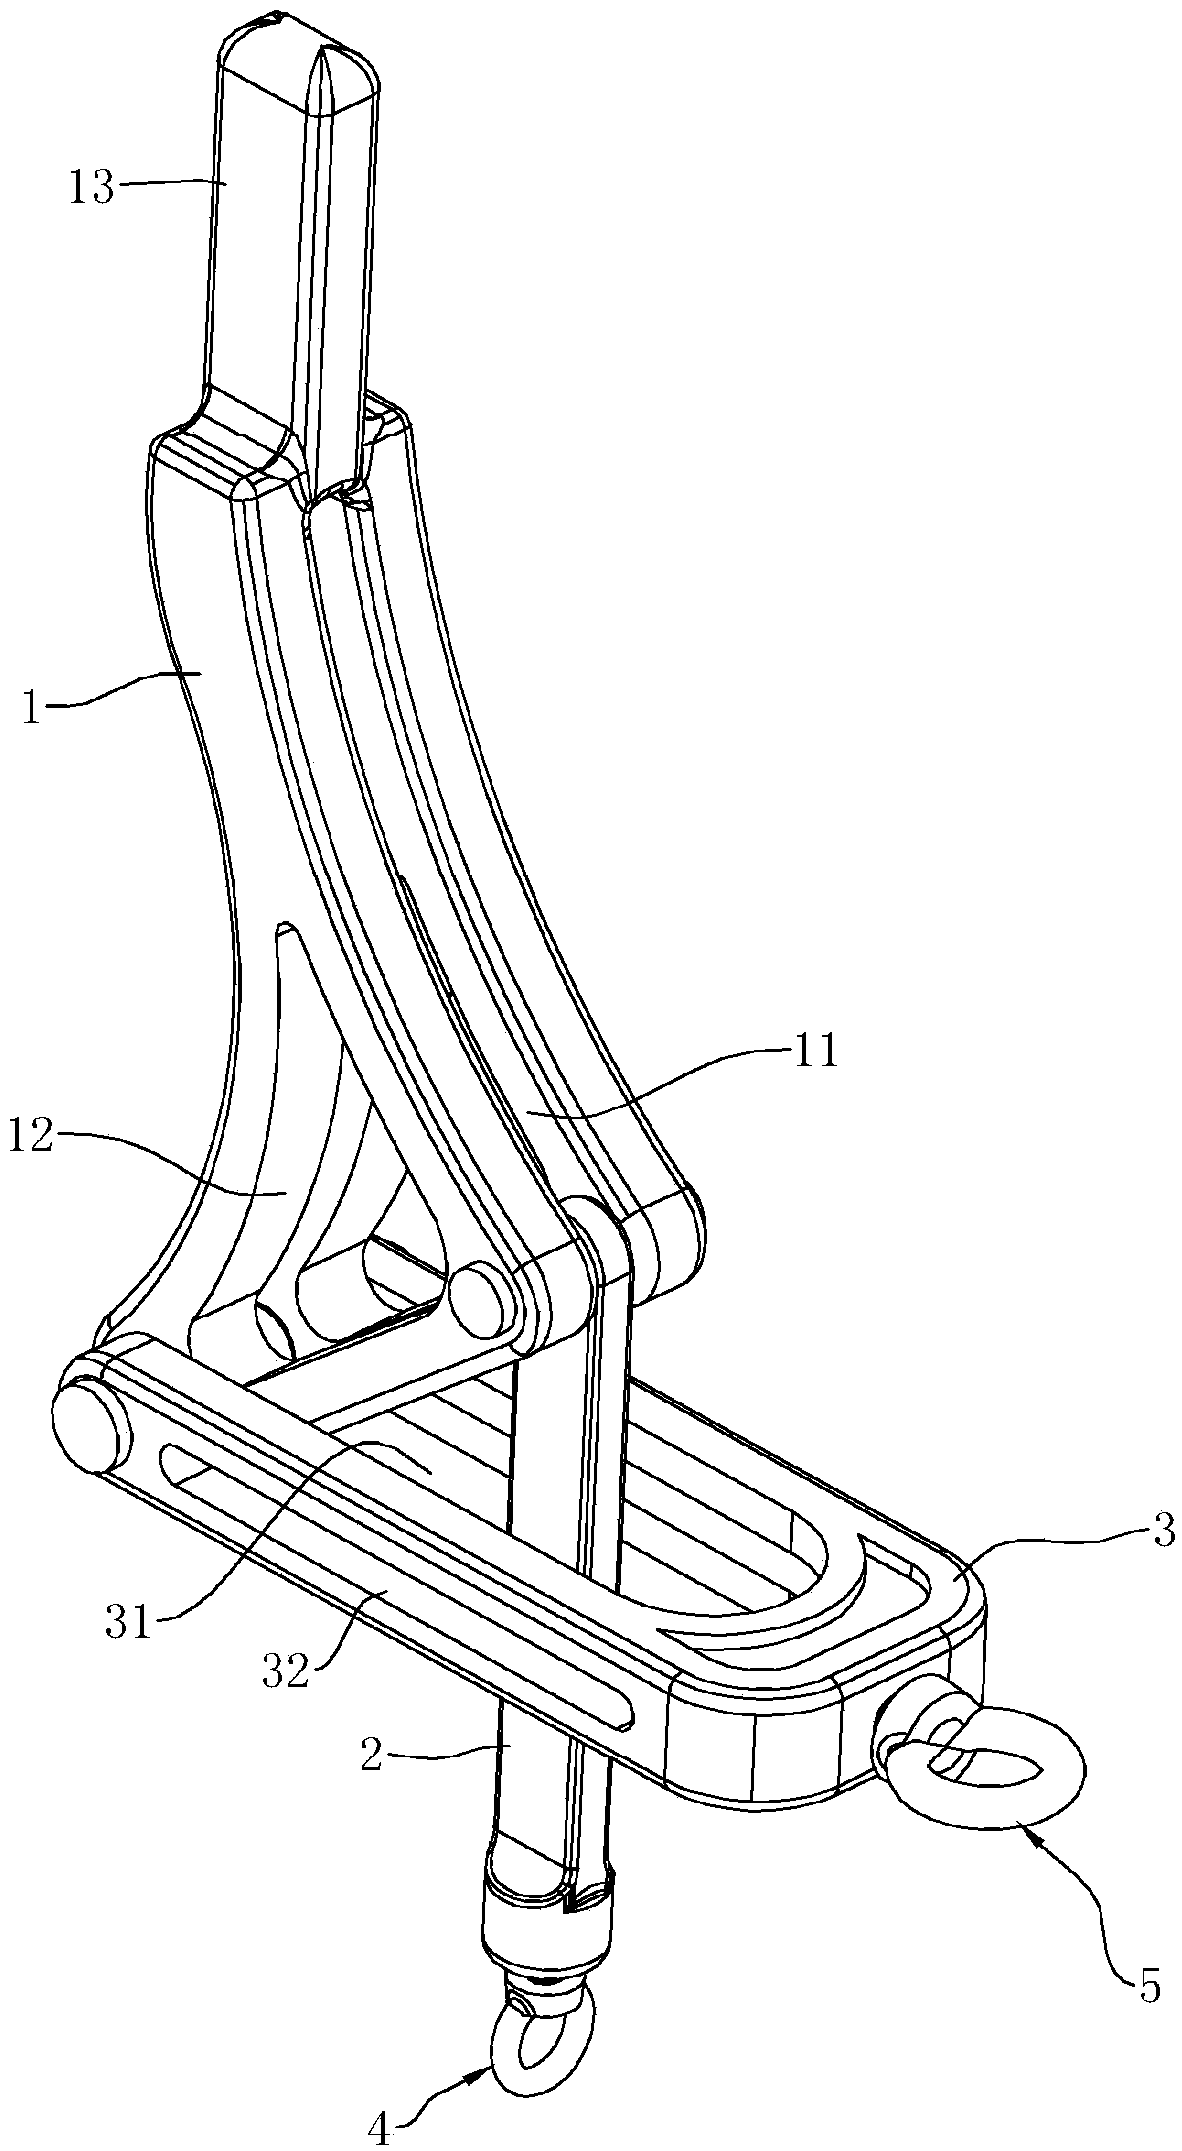 Binding fastening device